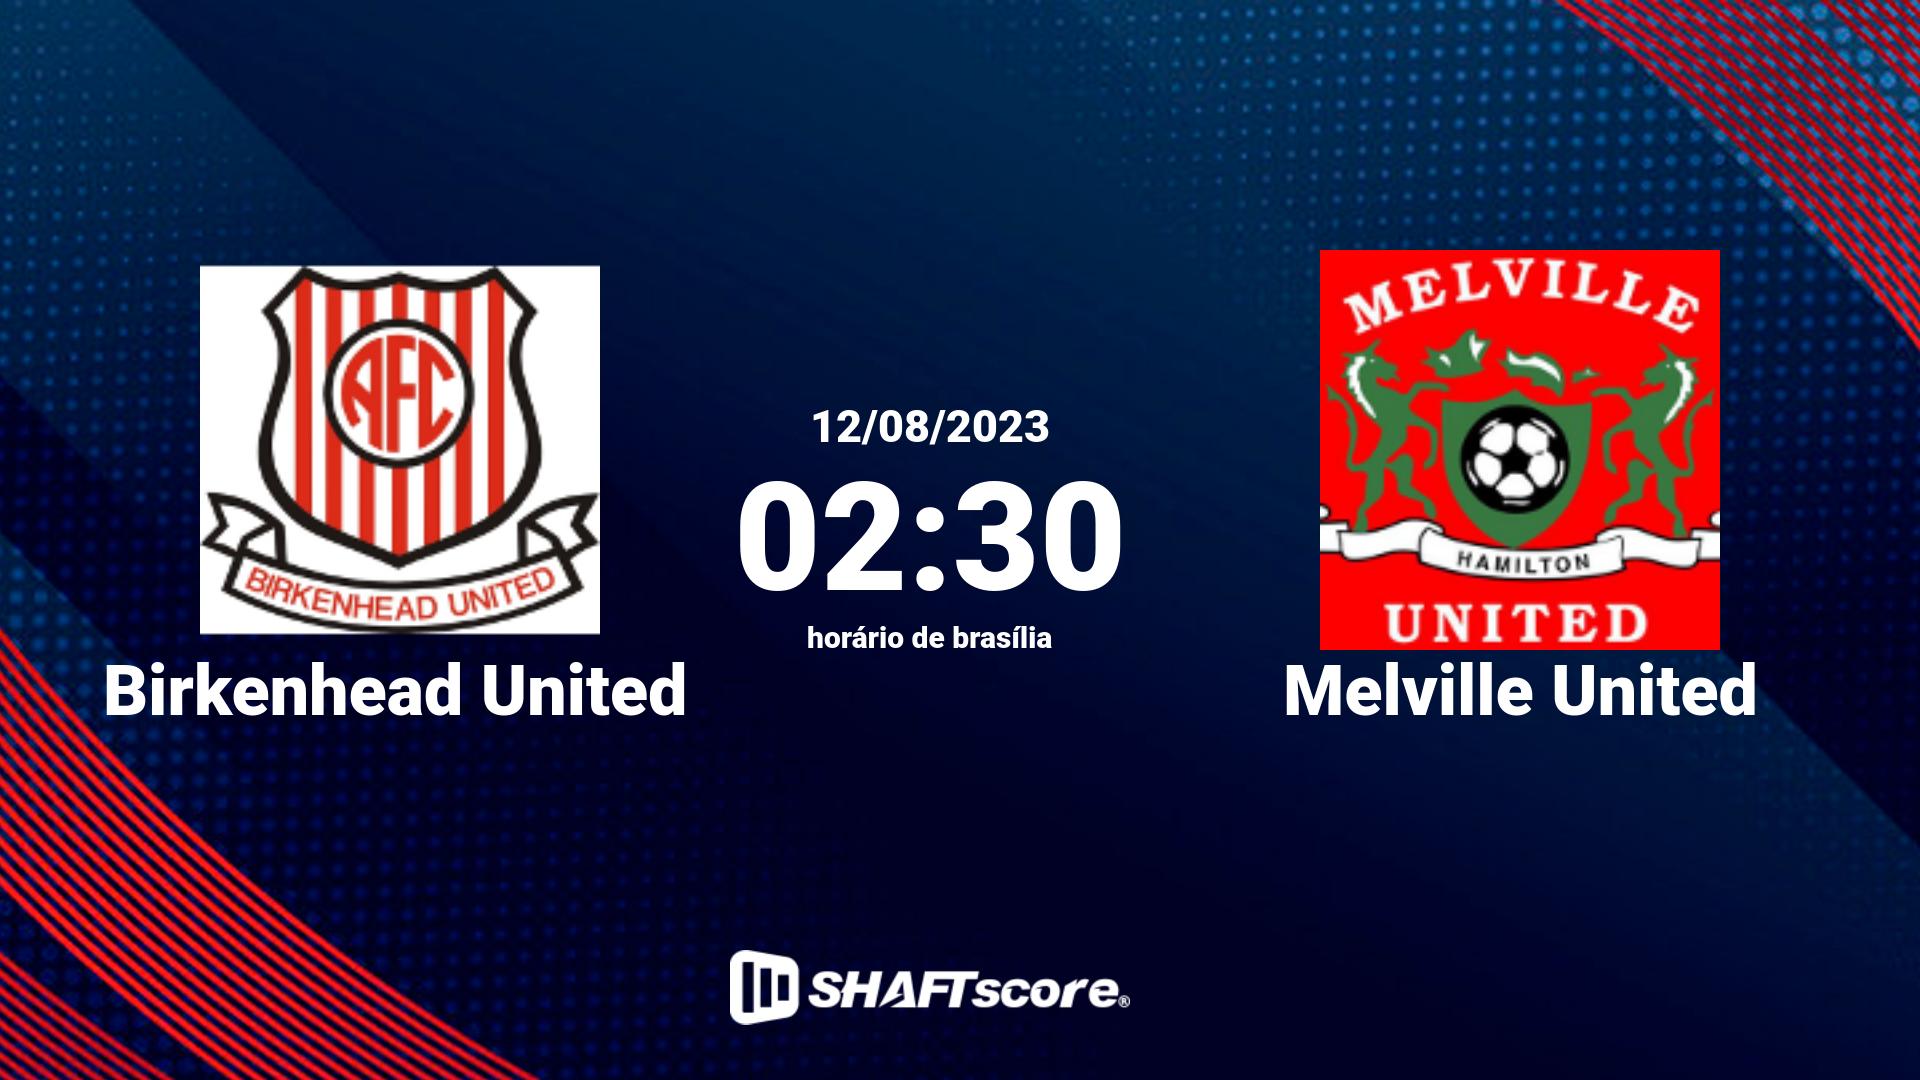 Estatísticas do jogo Birkenhead United vs Melville United 12.08 02:30